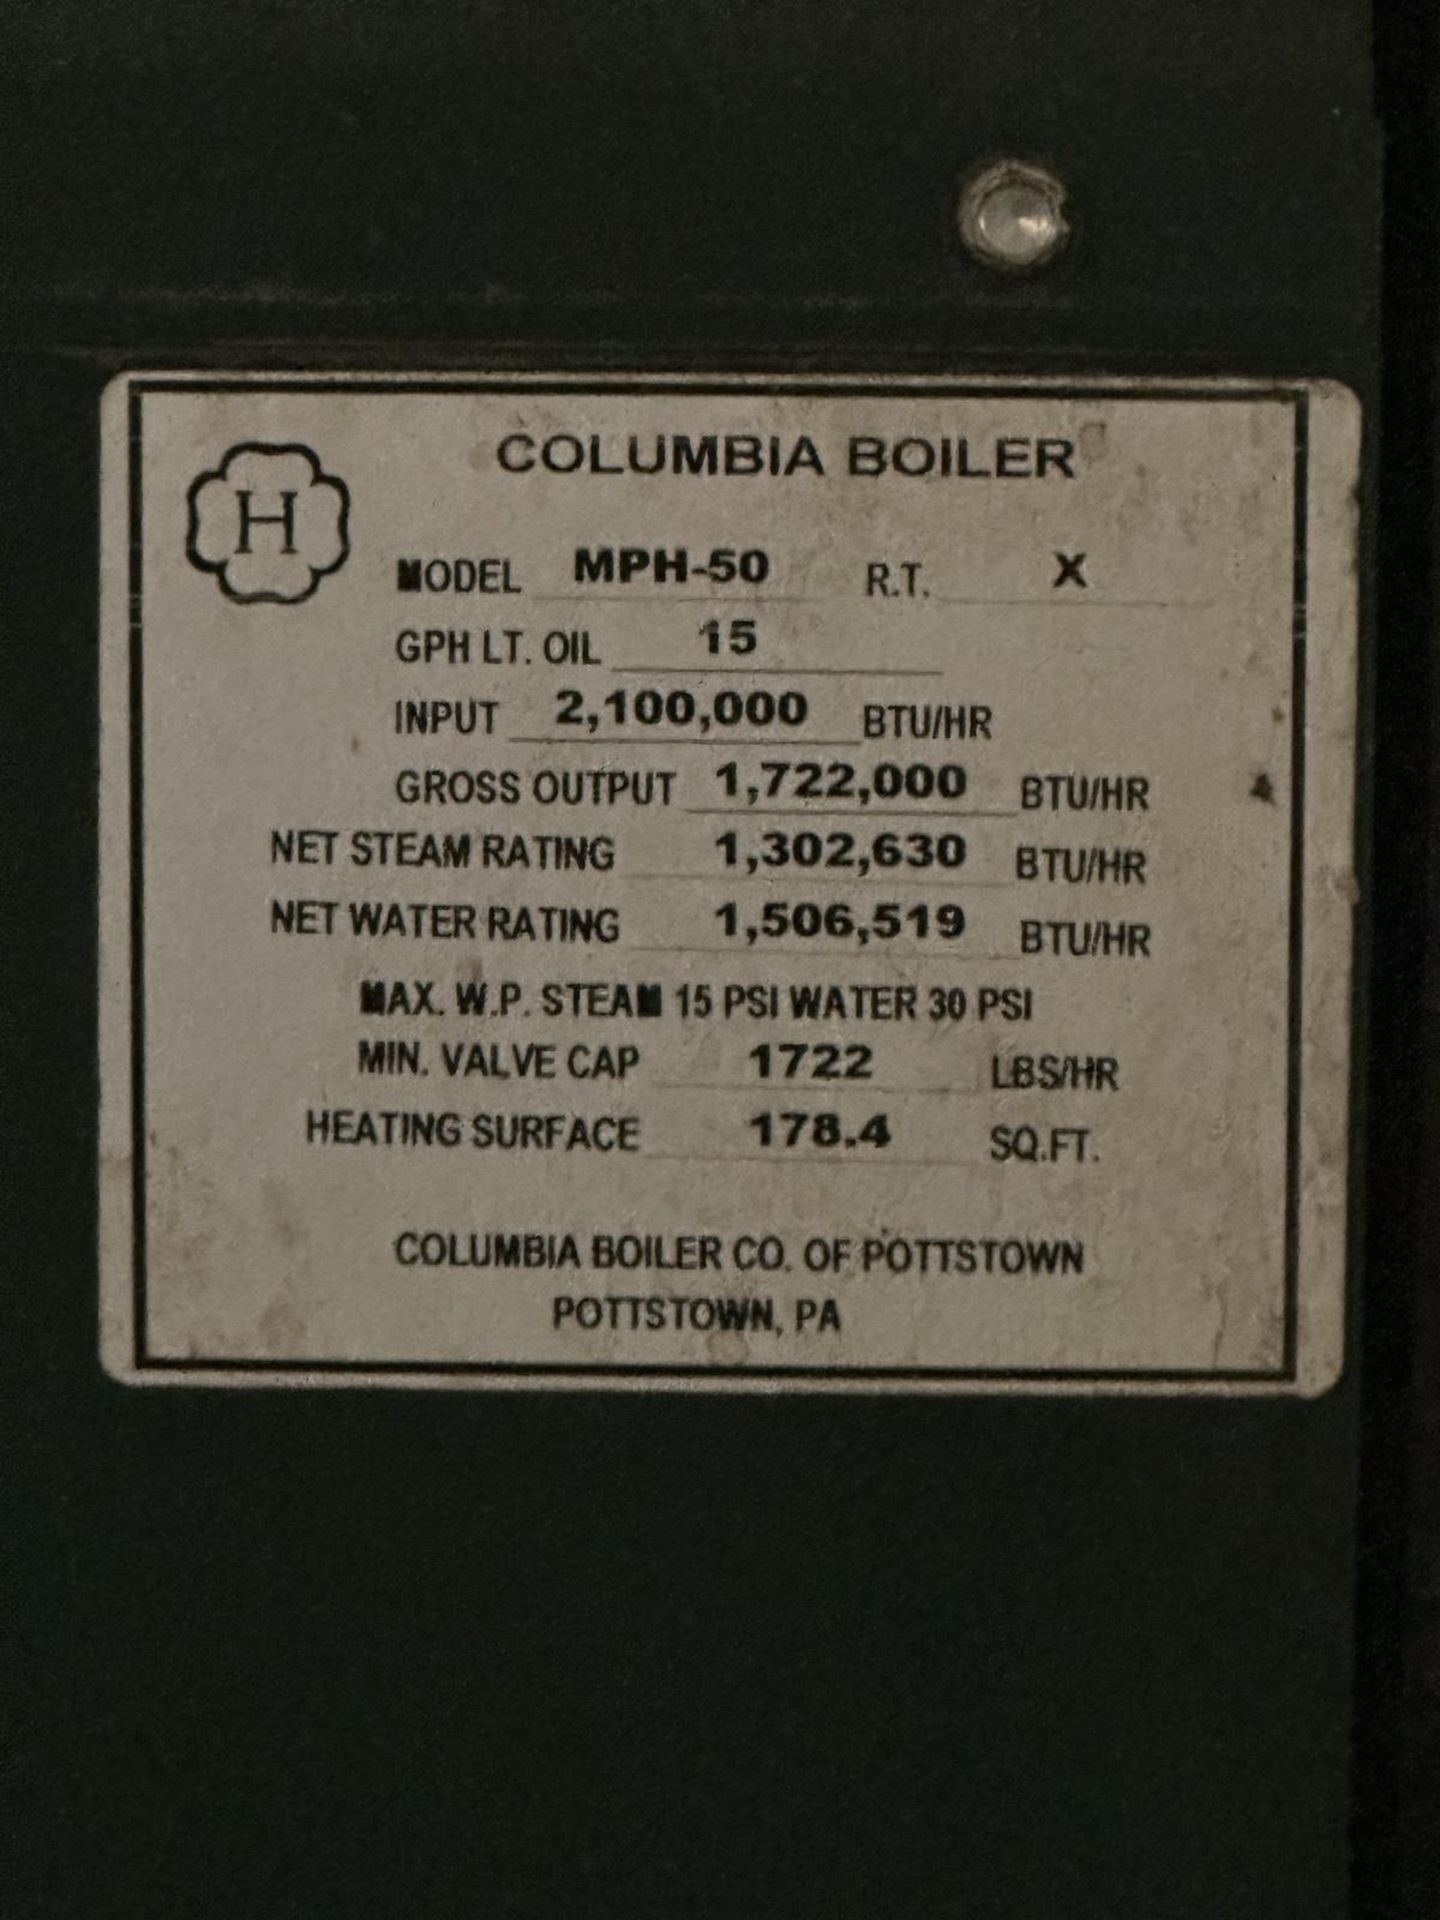 Columbia MPH-50 Gas Boiler, 2,100,000 BTU/HR Input | Rig Fee $350 - Image 4 of 4